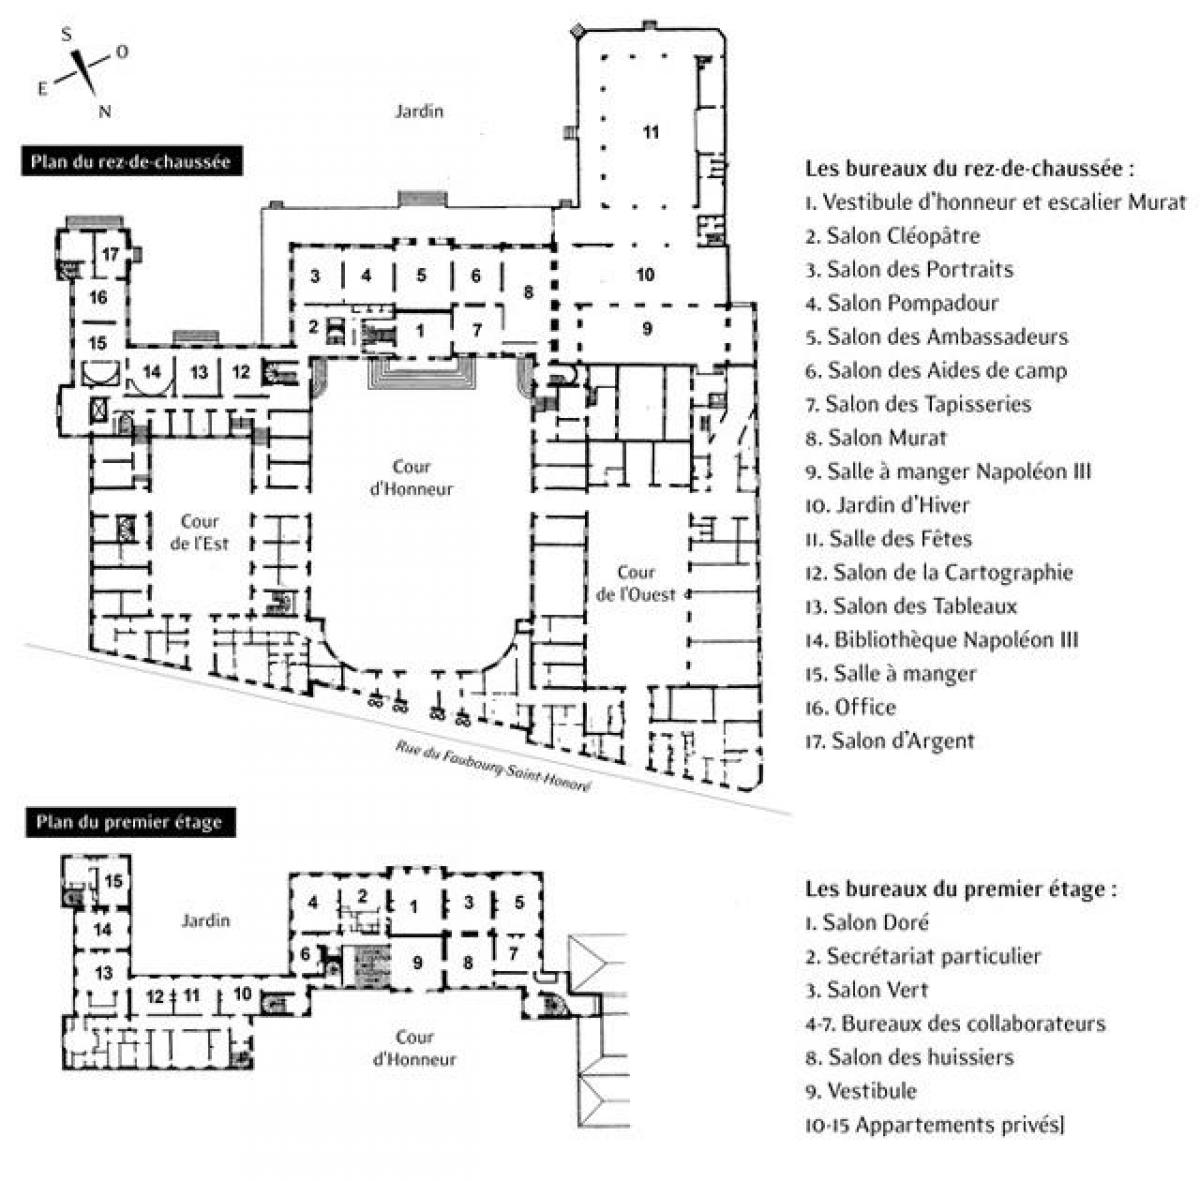 Map of The Élysée Palace